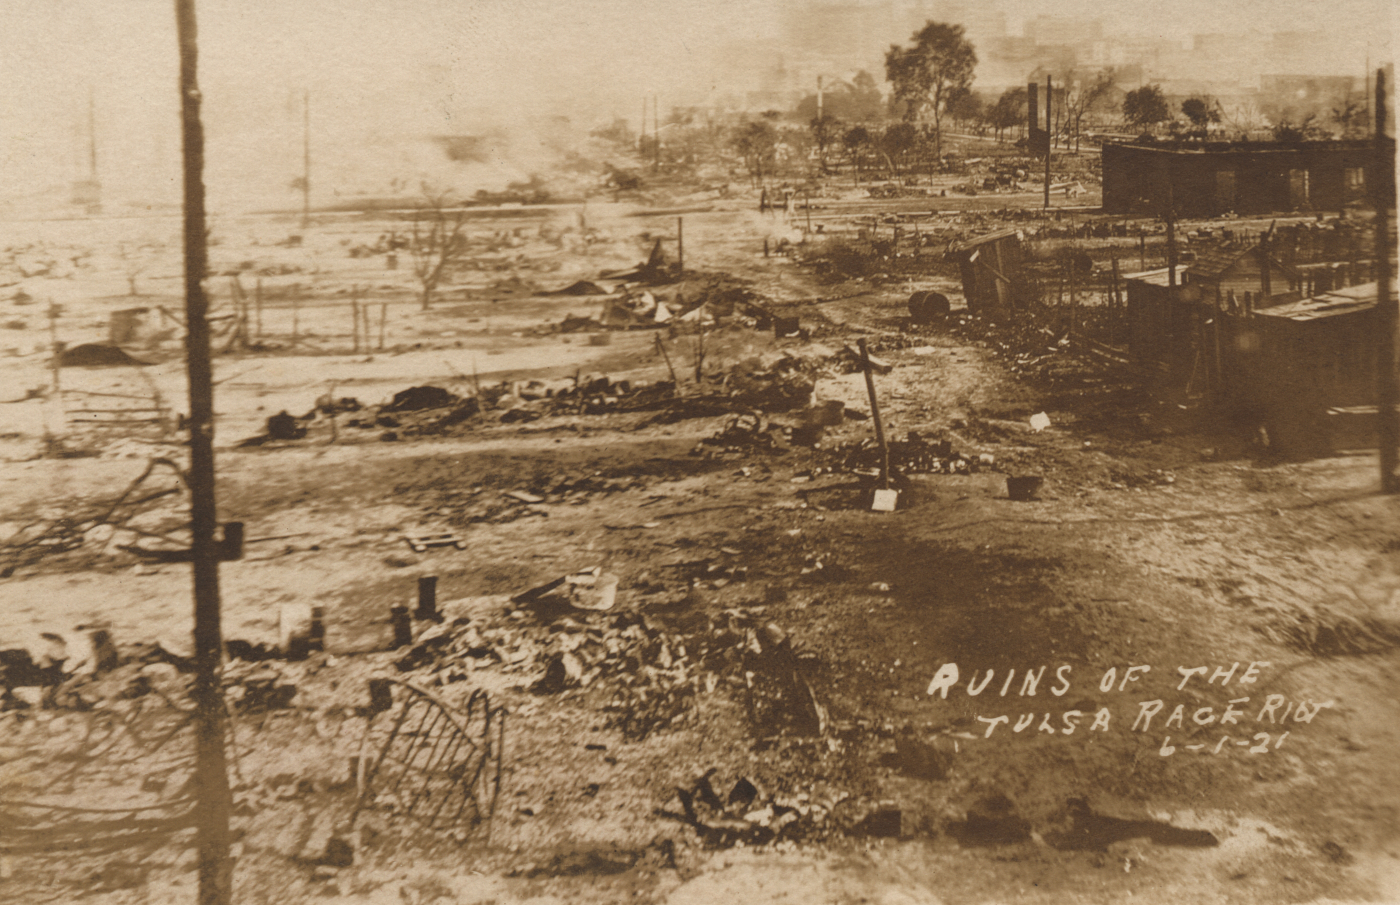 Photographing the Tulsa Massacre of 1921